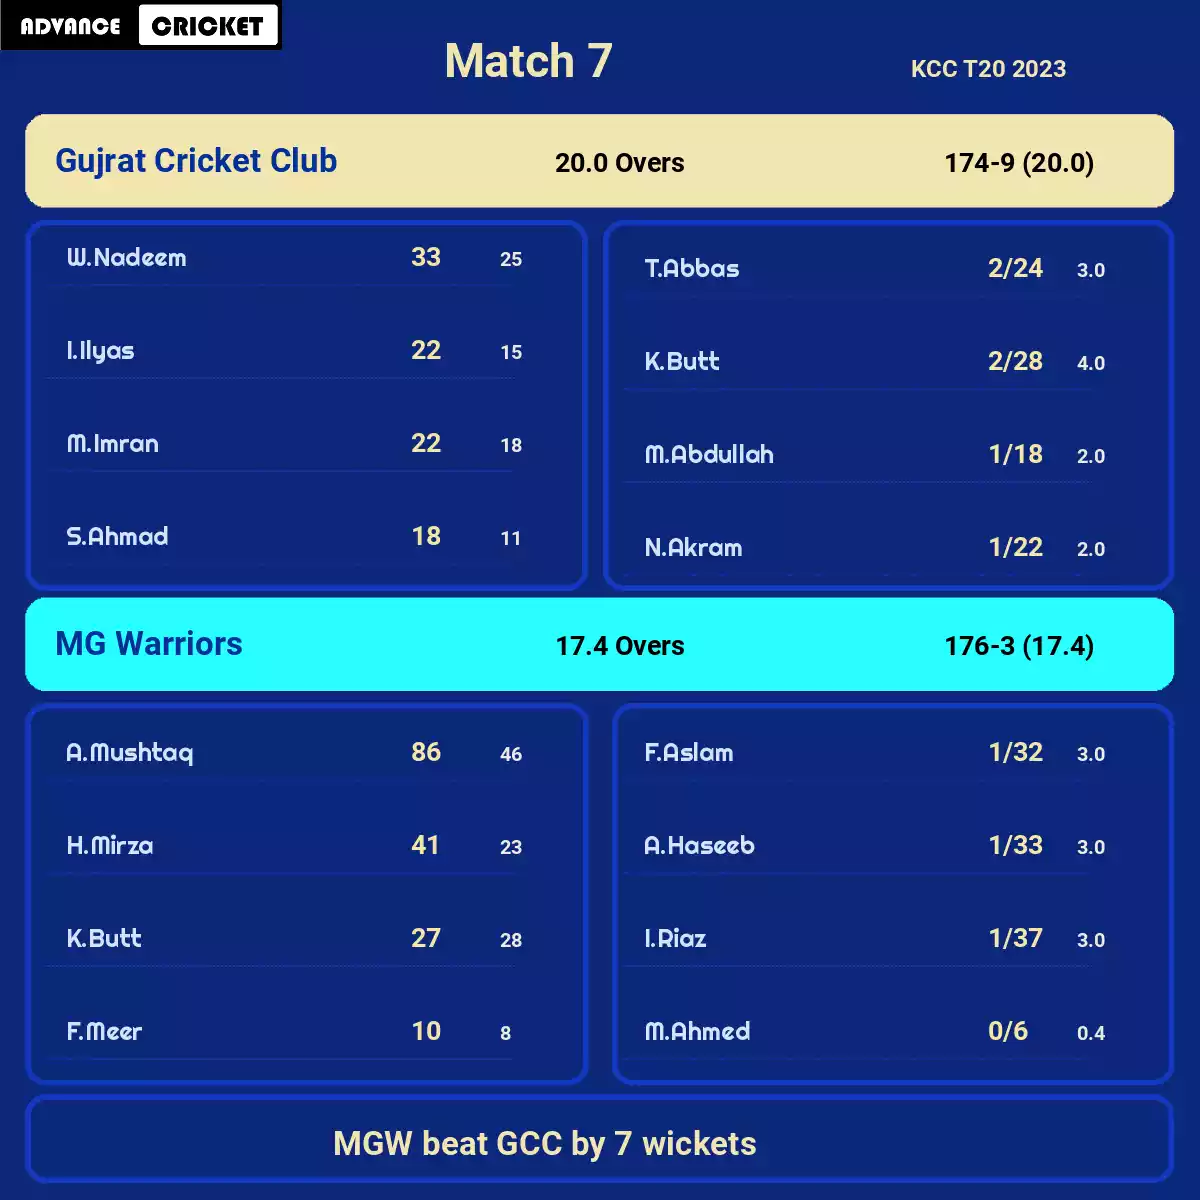 GCC vs MGW Match 7 KCC T20 2023